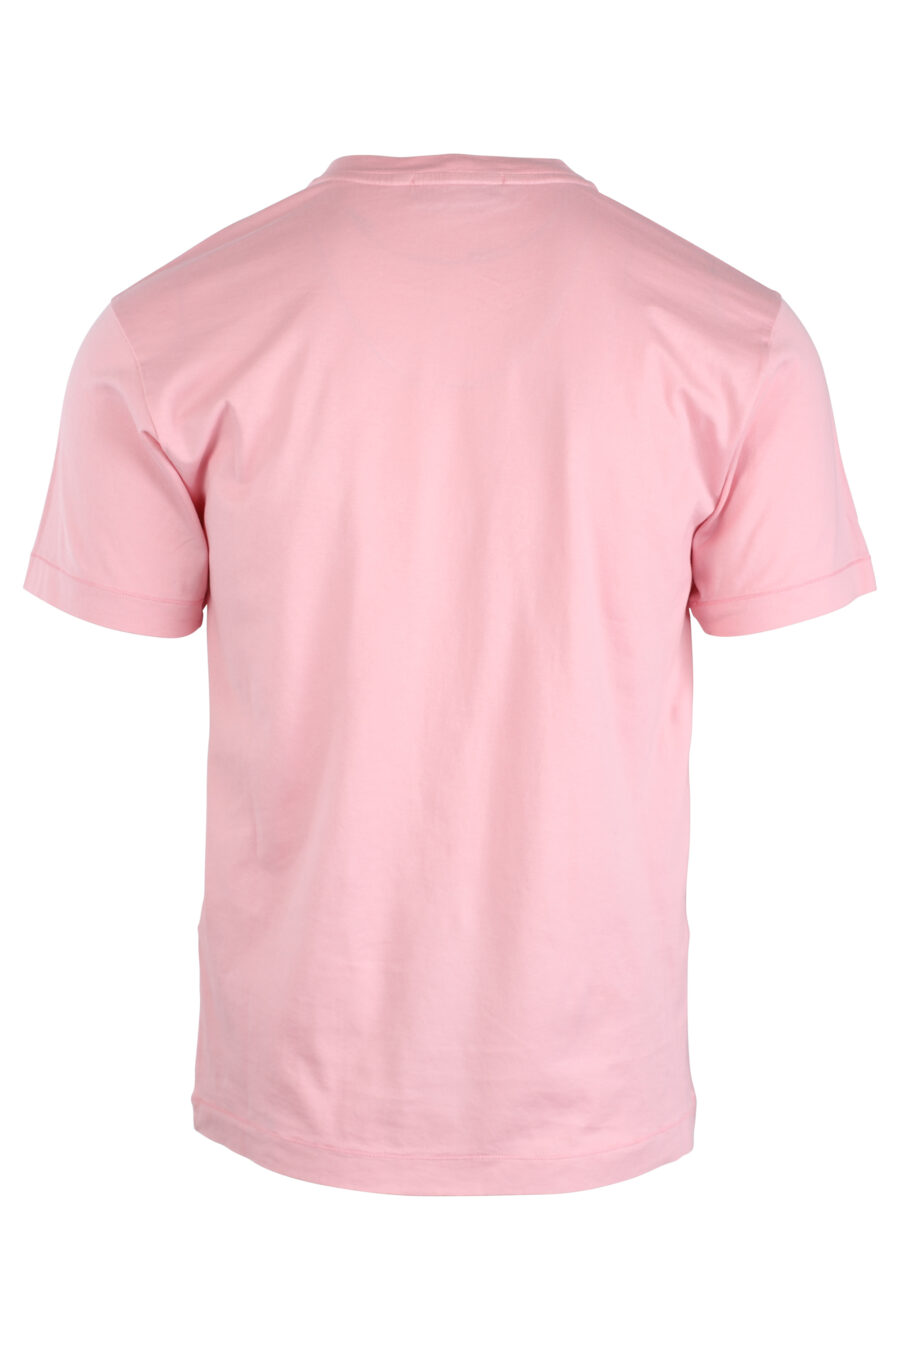 Camiseta rosa con minilogo parche - IMG 1694